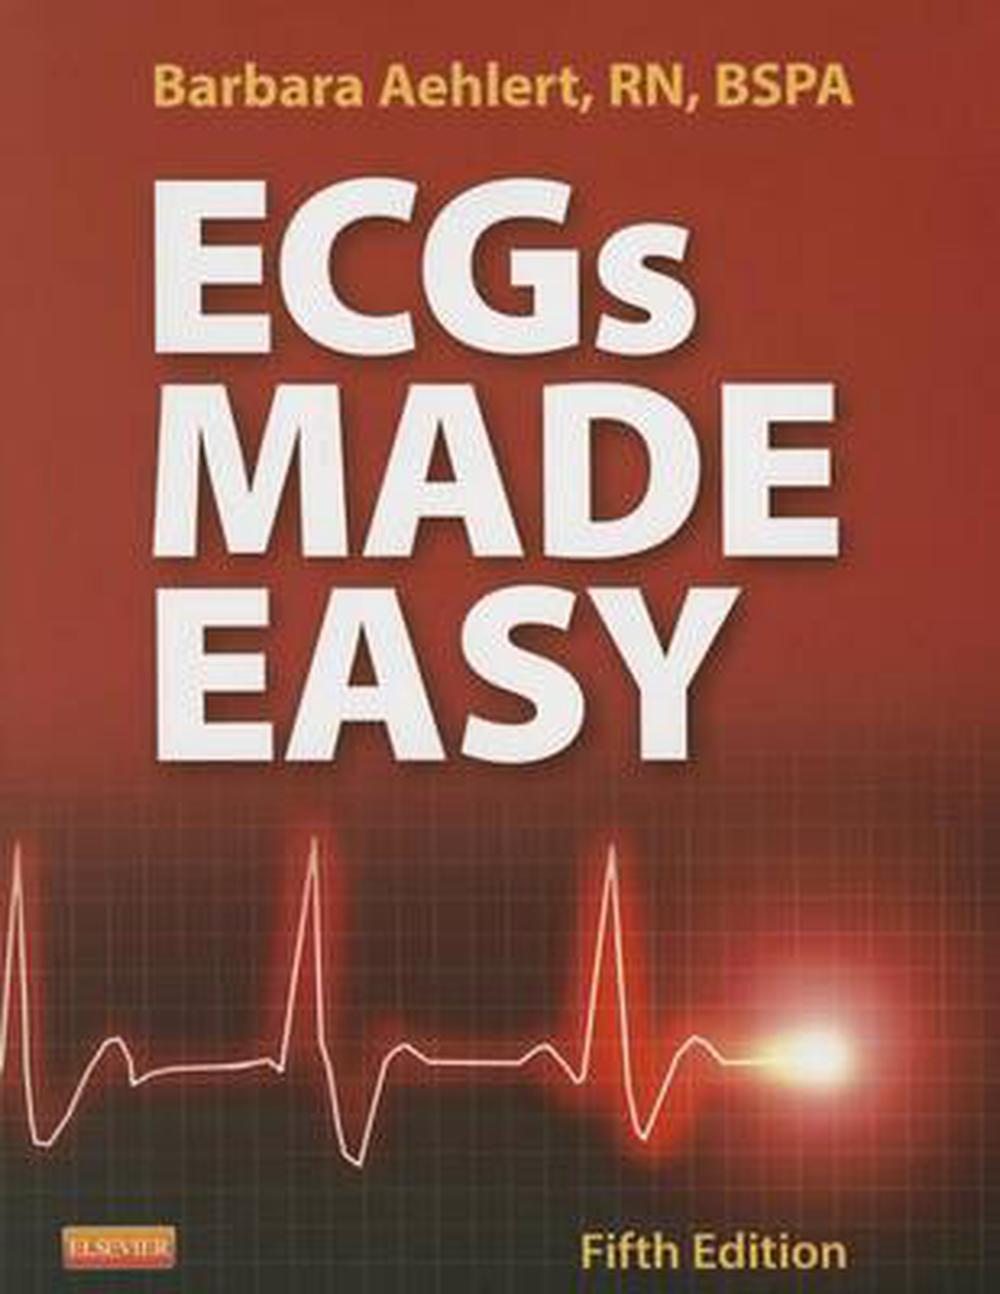 Ecgs Made Easy by Barbara Aehlert, Hardcover, 9780323170574 Buy